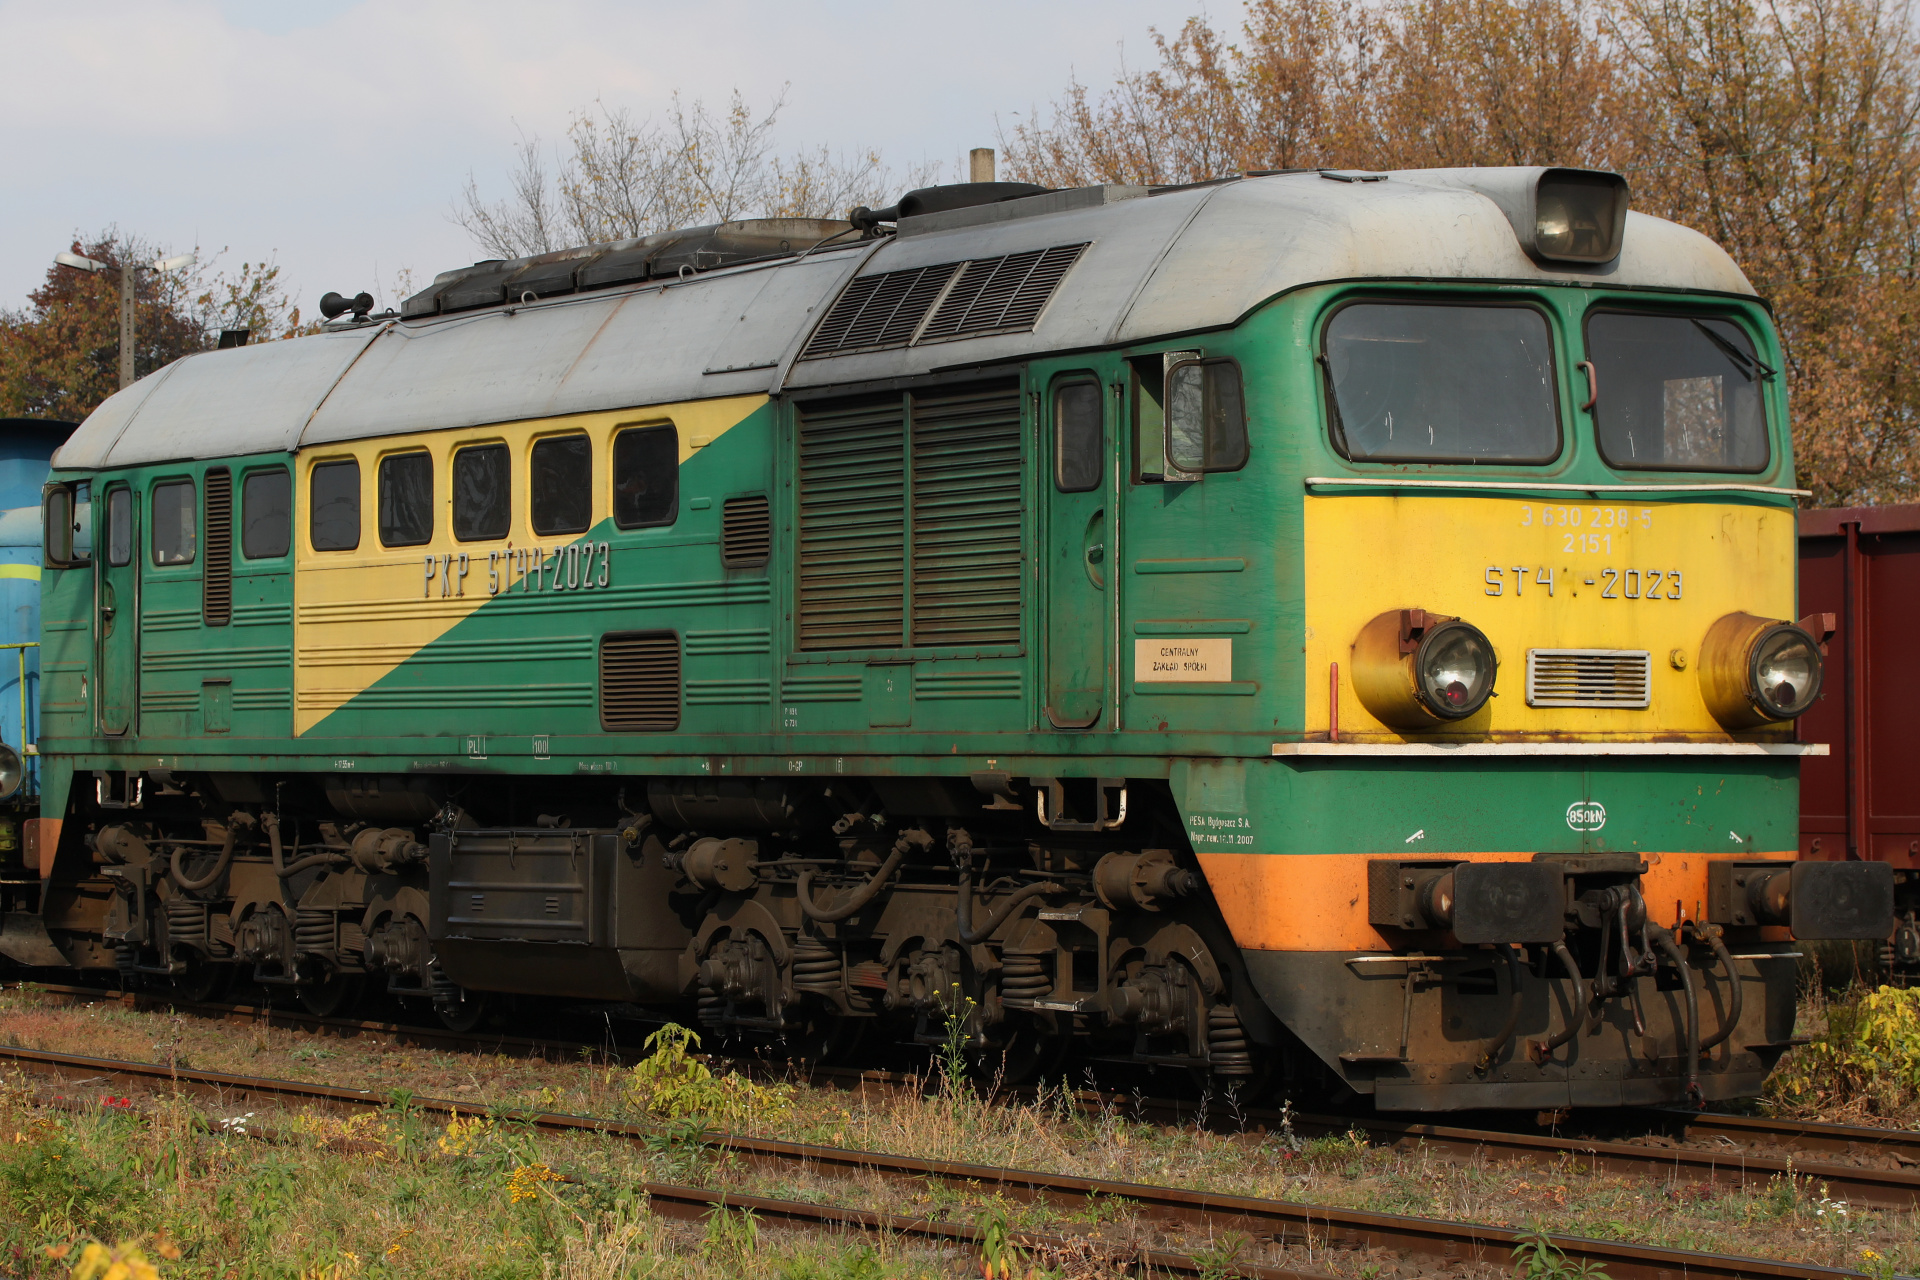 ST44-2023 (Vehicles » Trains and Locomotives » ЛТЗ M62)